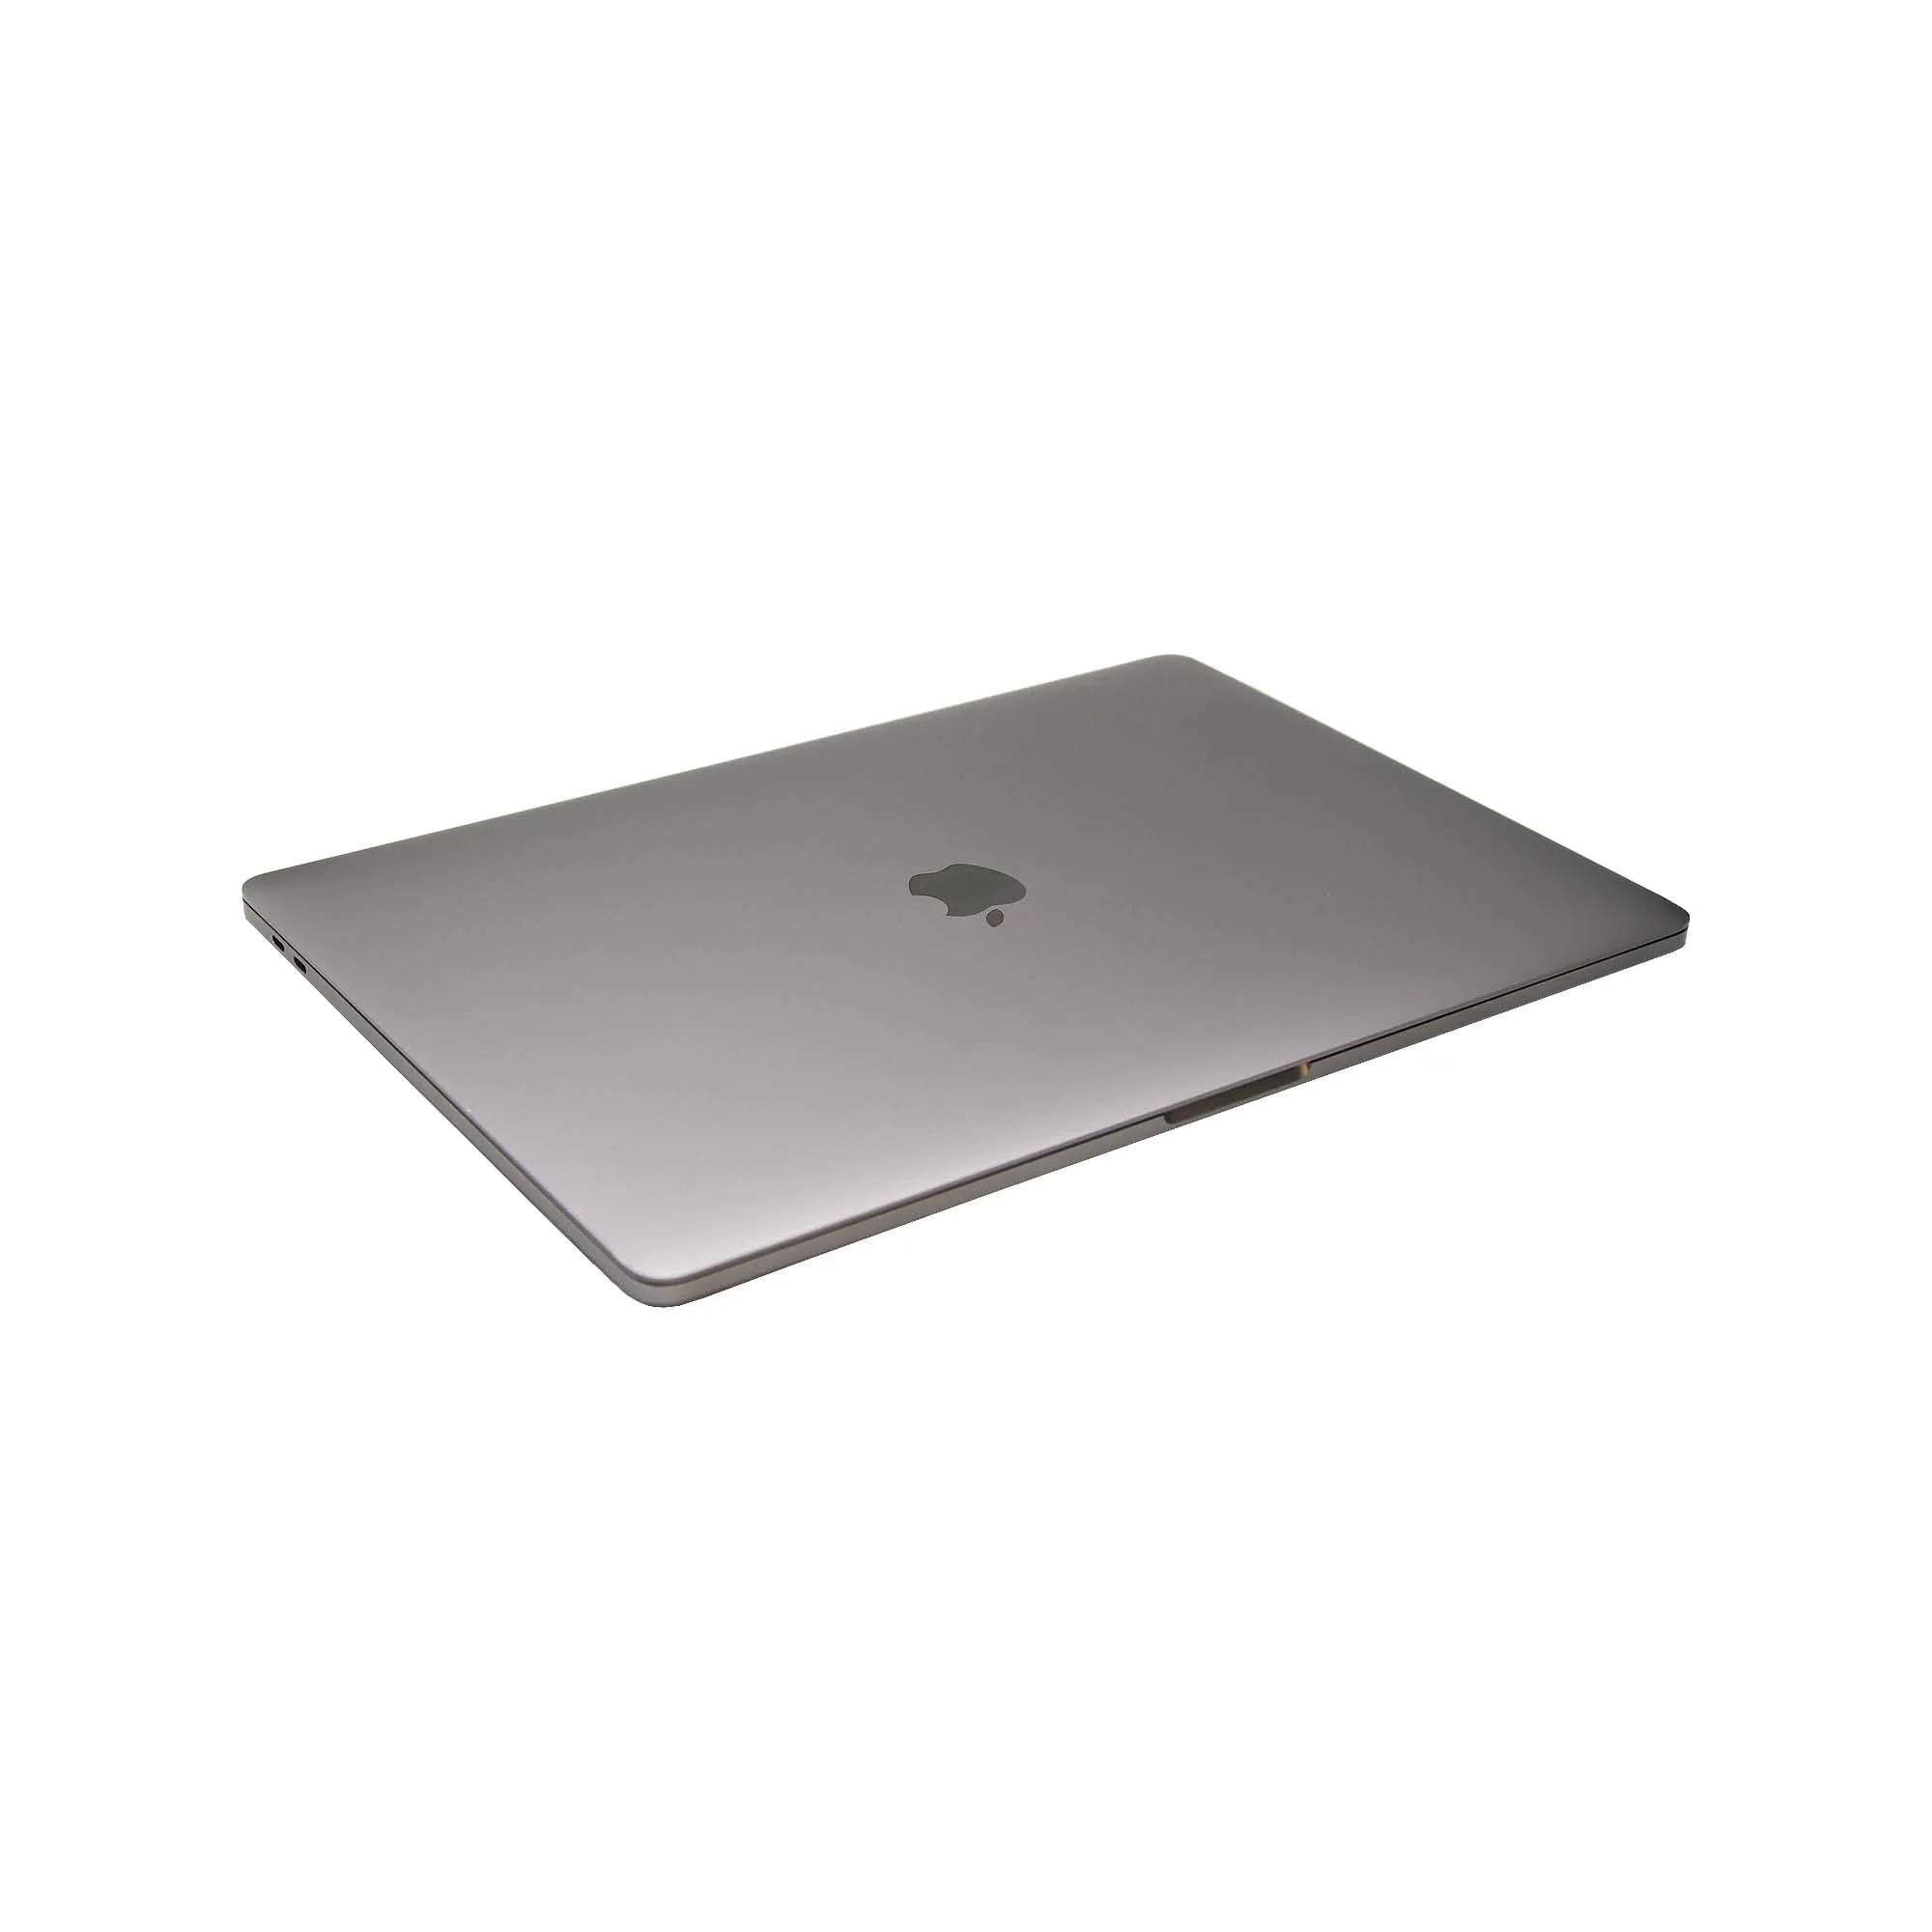 MacBook Pro 2019, Intel Core i9, 16GB RAM, 500GB, Touch Bar